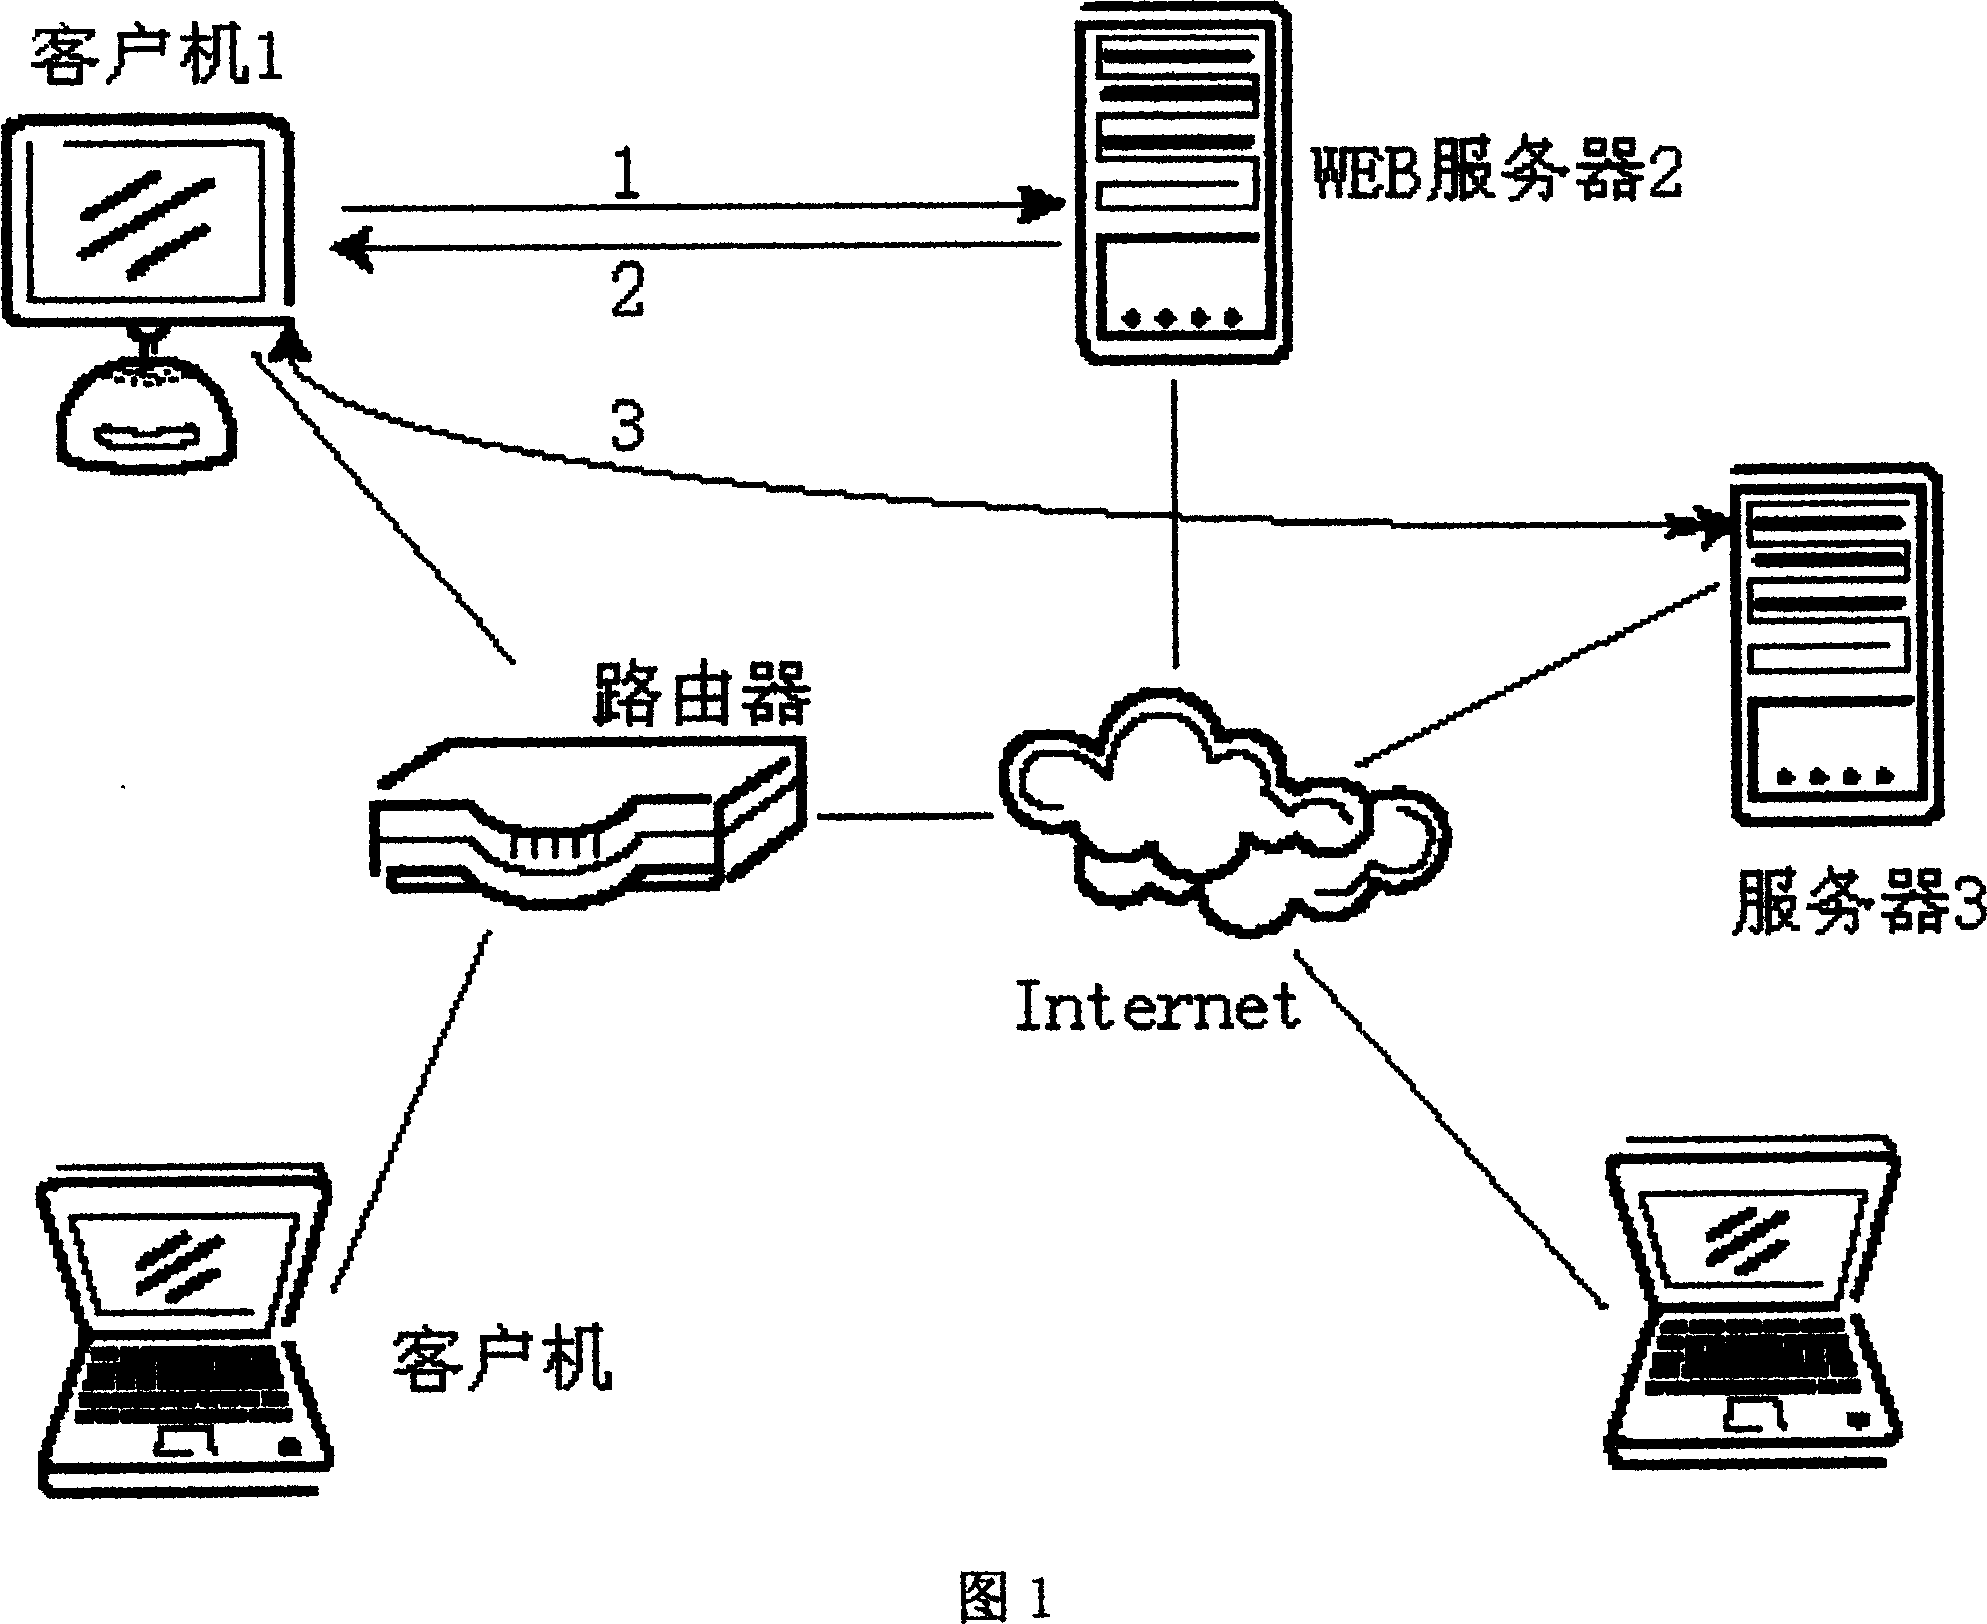 Method for server using non static IP